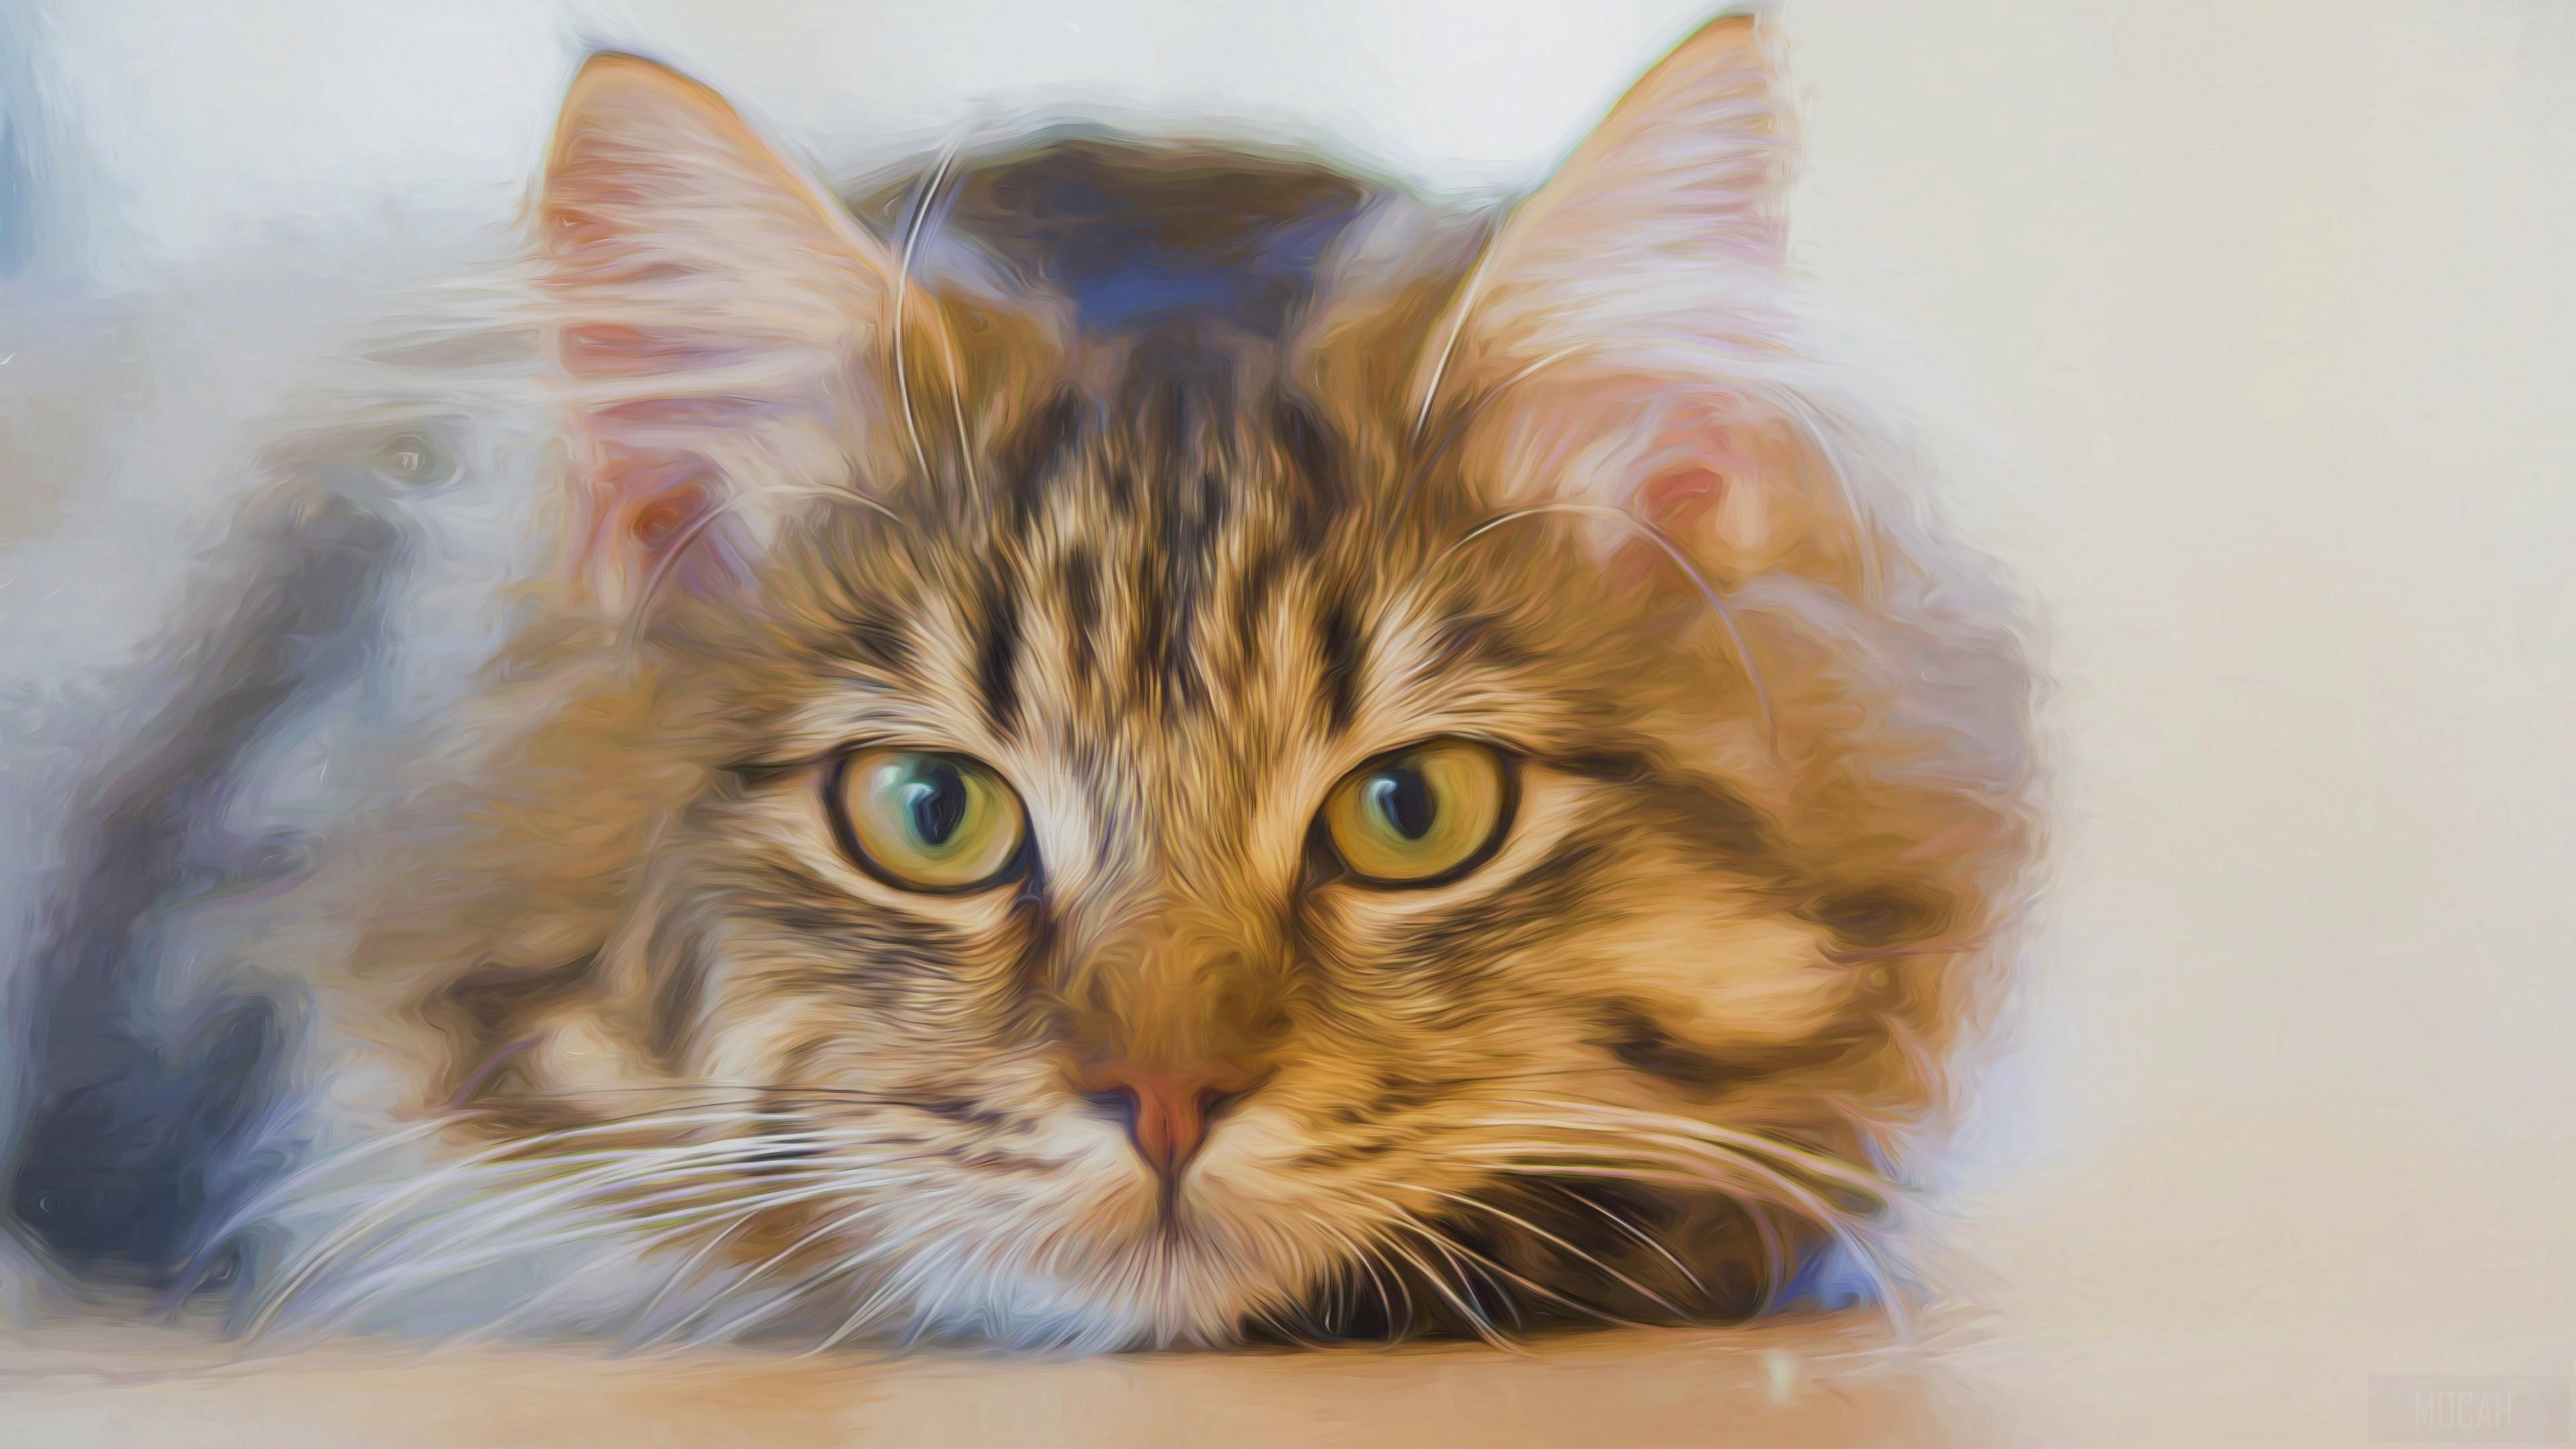 HD wallpaper, Oil Painting, Cat, Face, Painting, Pet 4K, Artistic